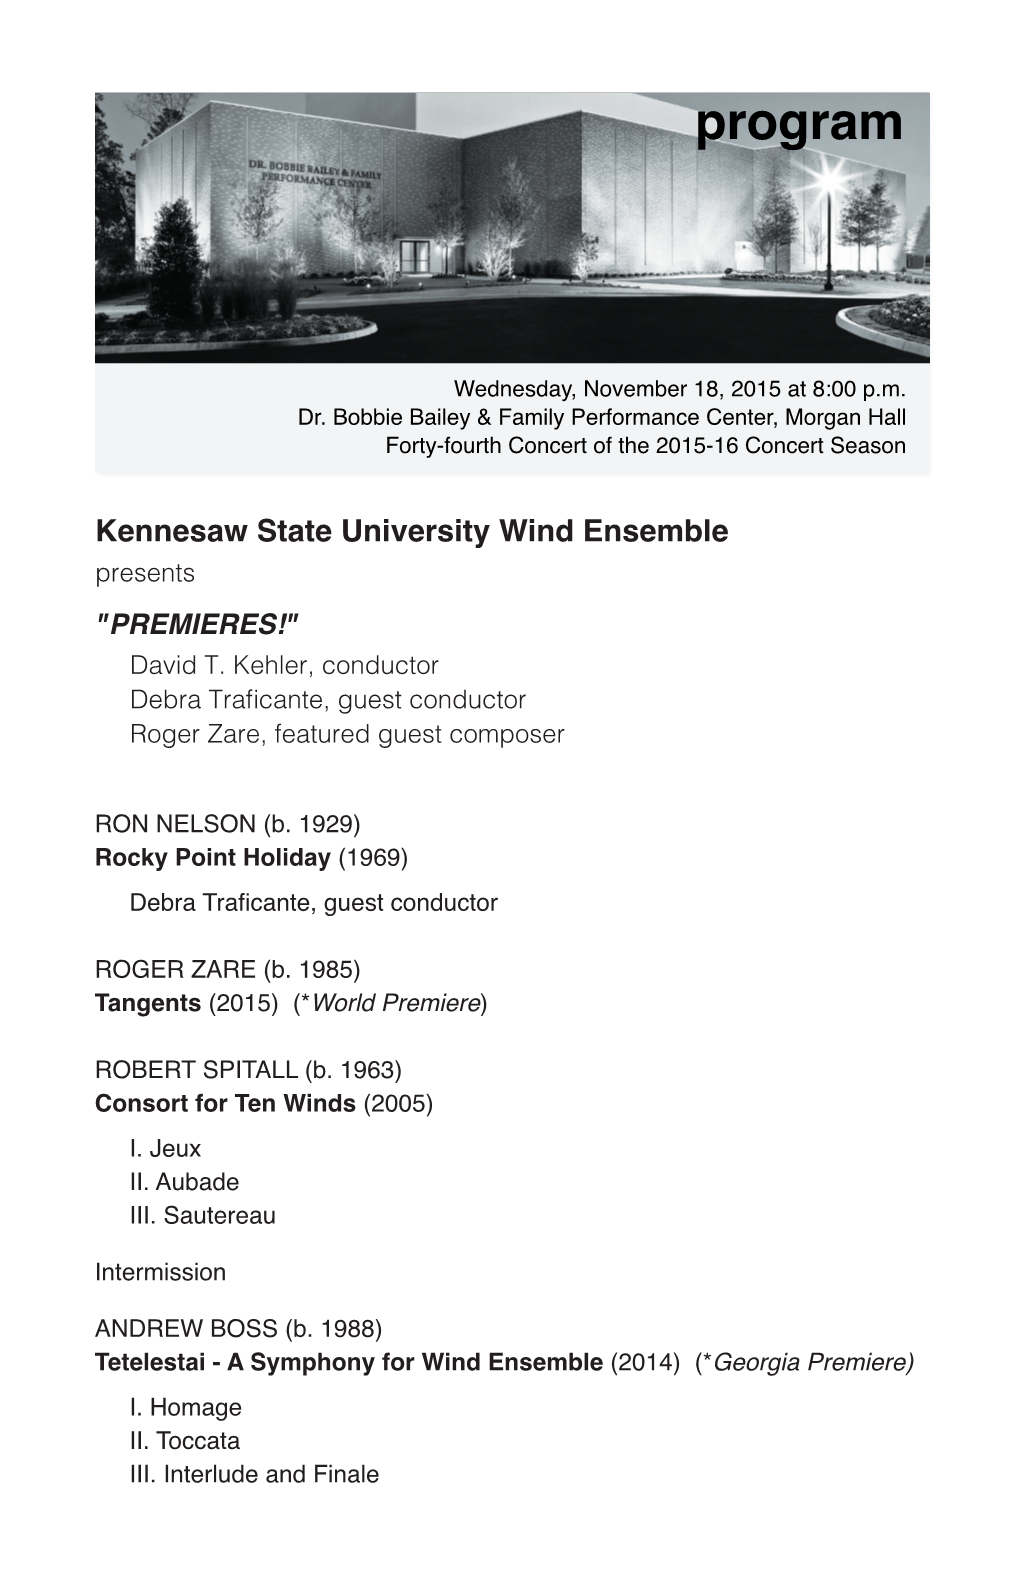 Kennesaw State University Wind Ensemble Presents